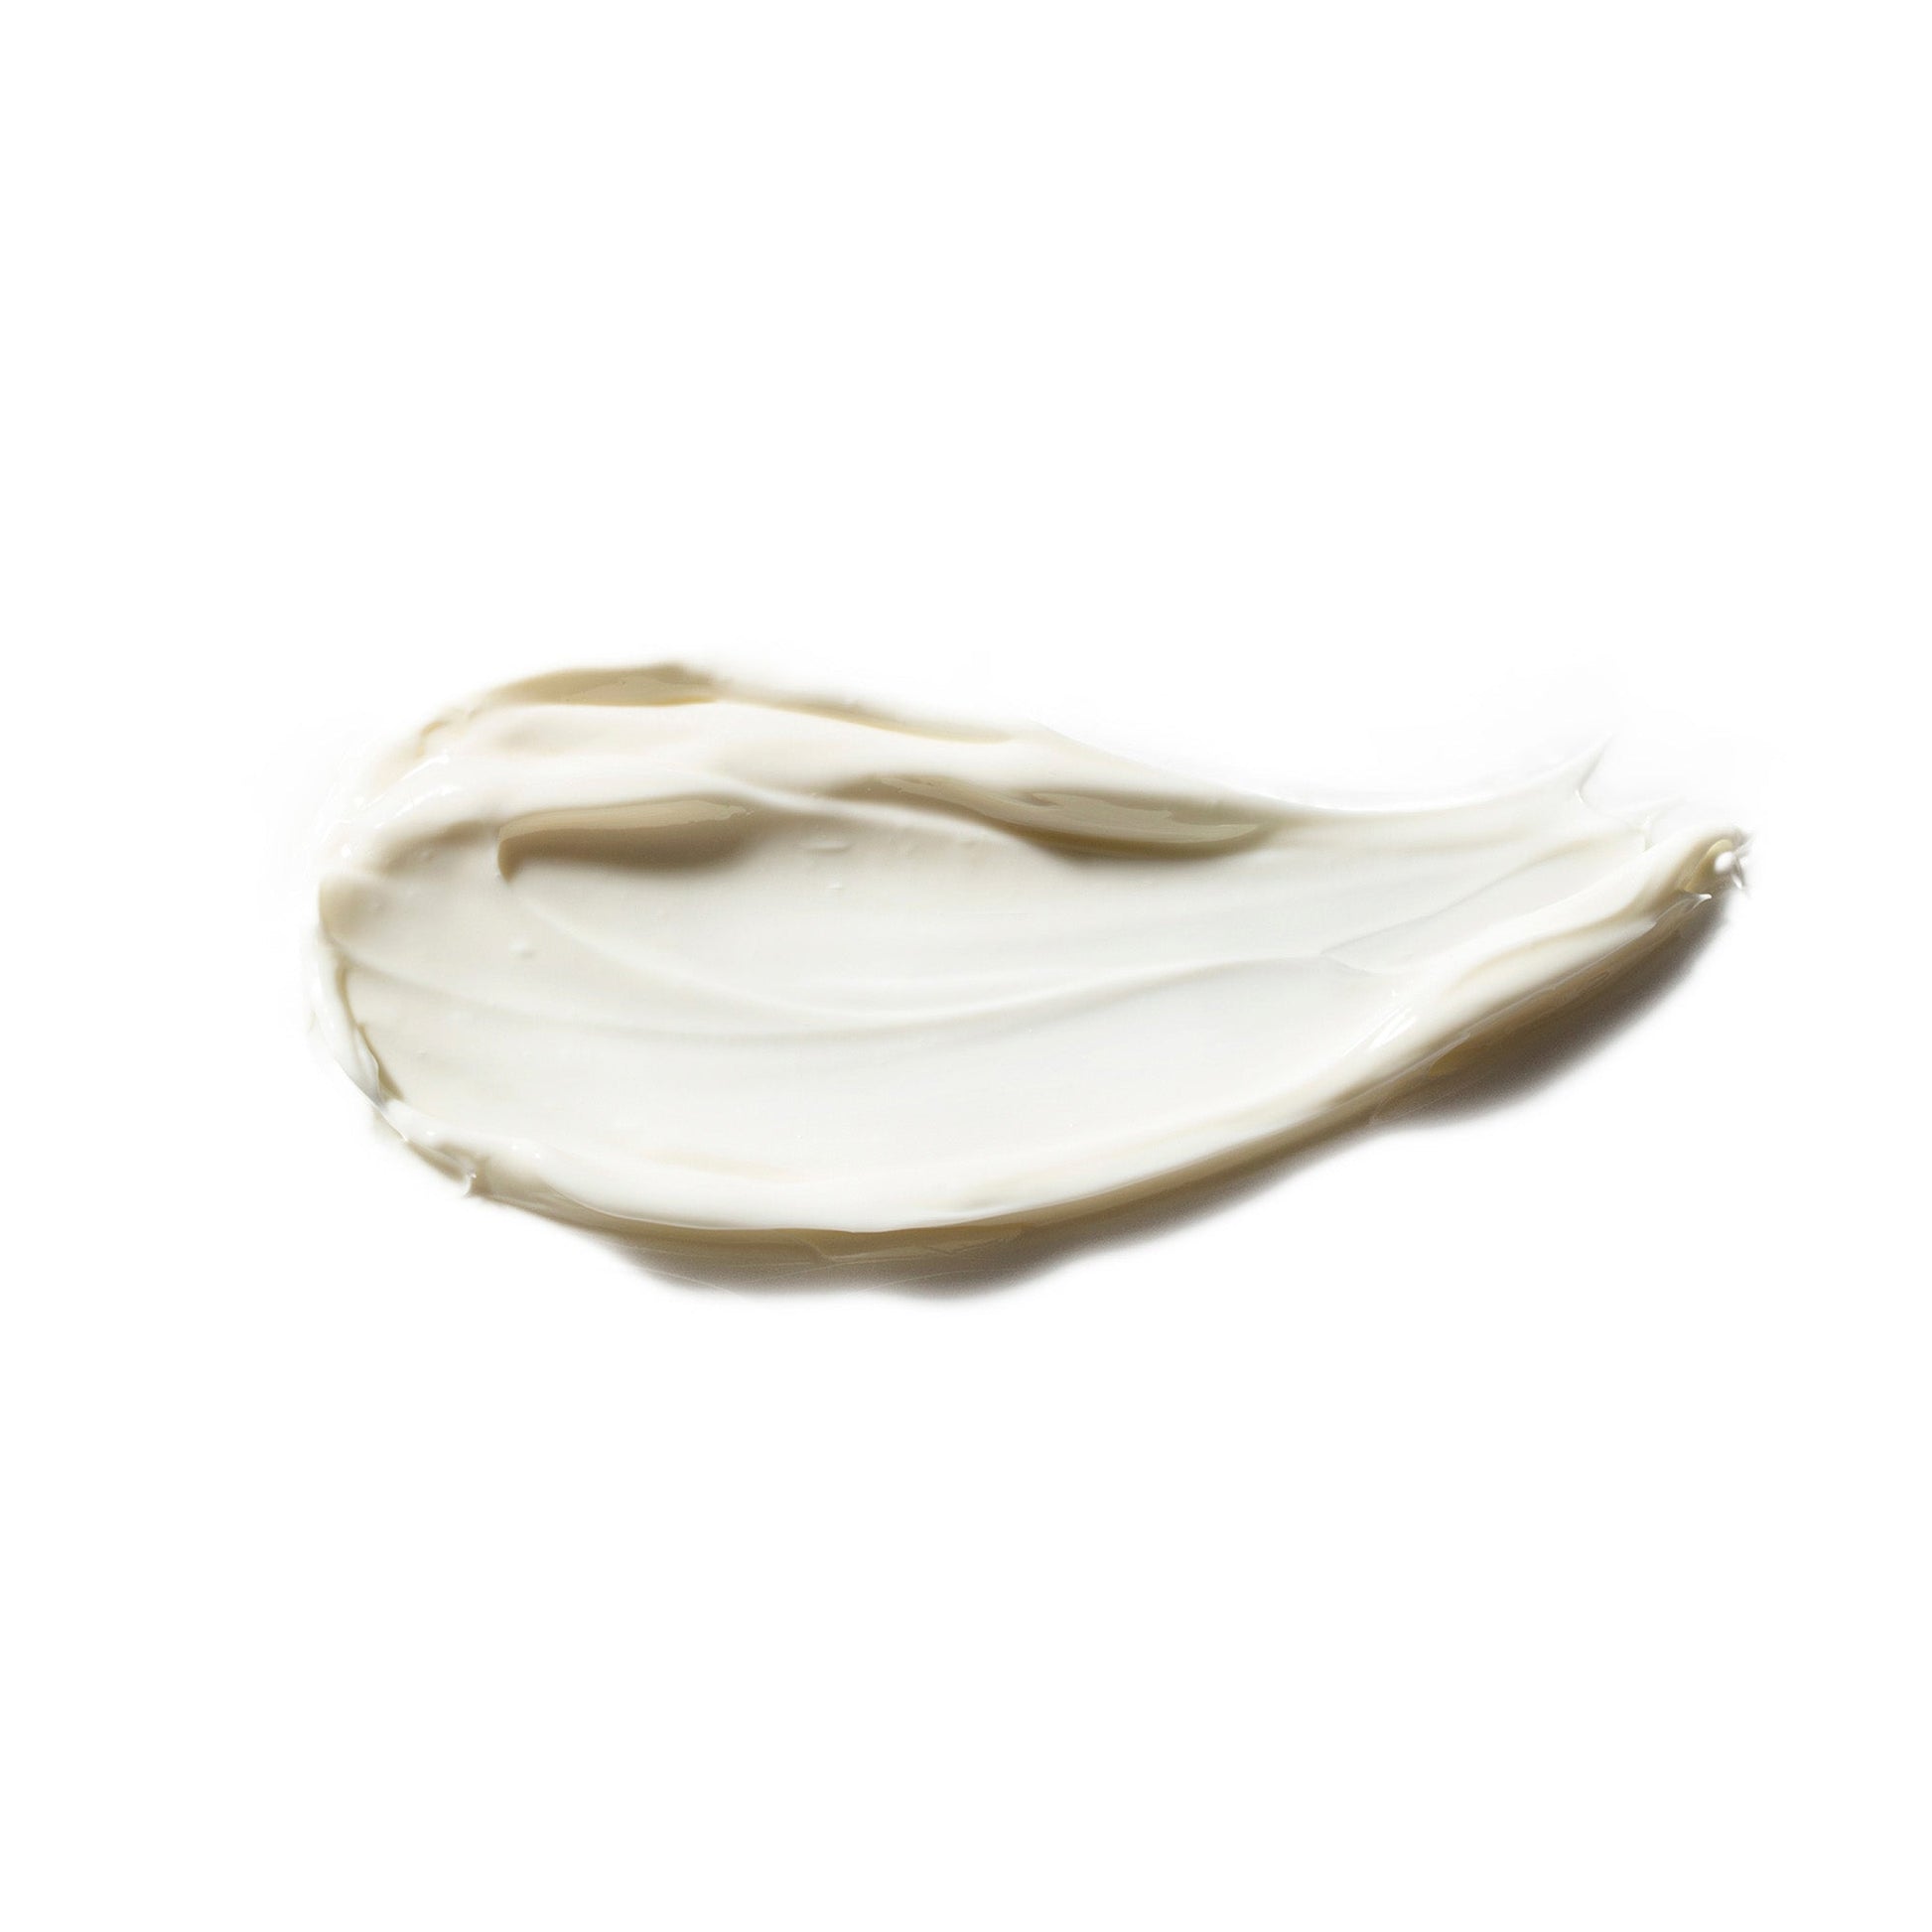 Mini Vanilla Pod Hydrating Day Cream 15ml - Antipodes Australia